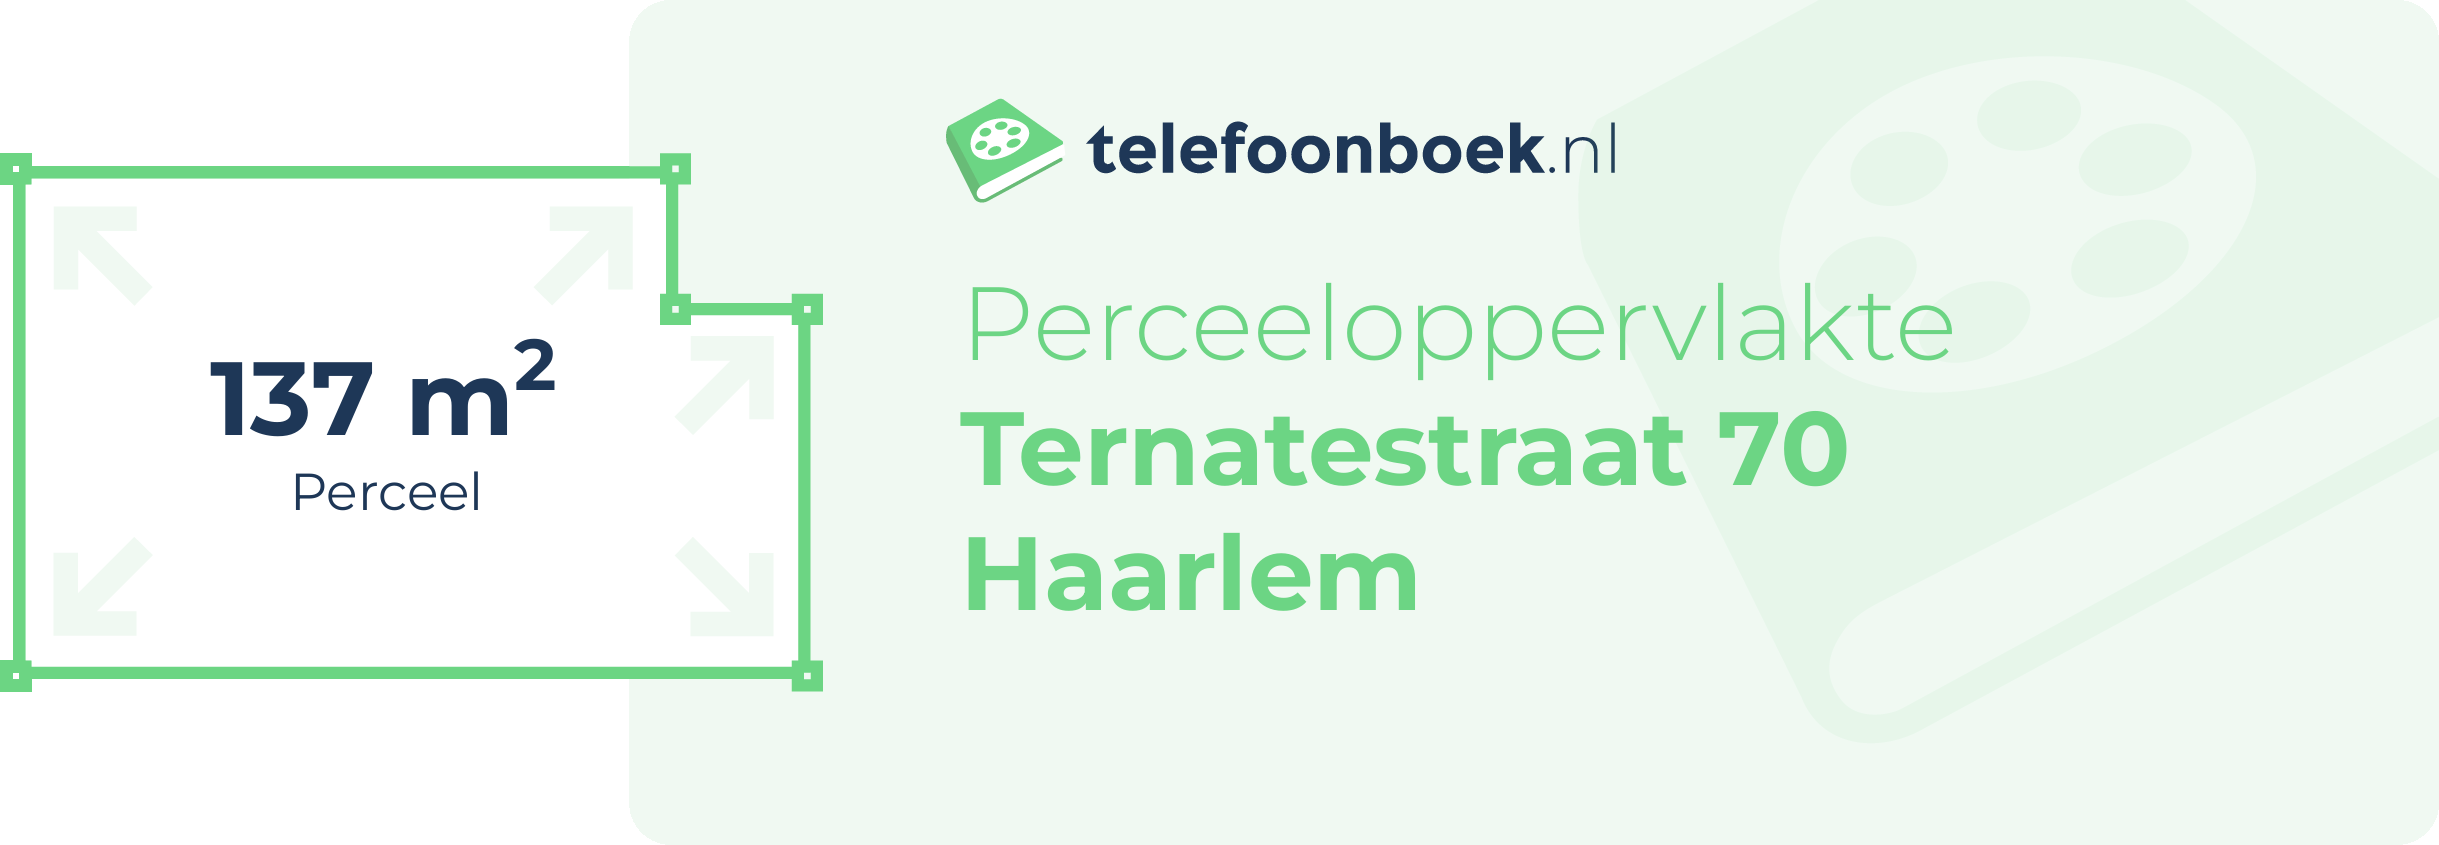 Perceeloppervlakte Ternatestraat 70 Haarlem